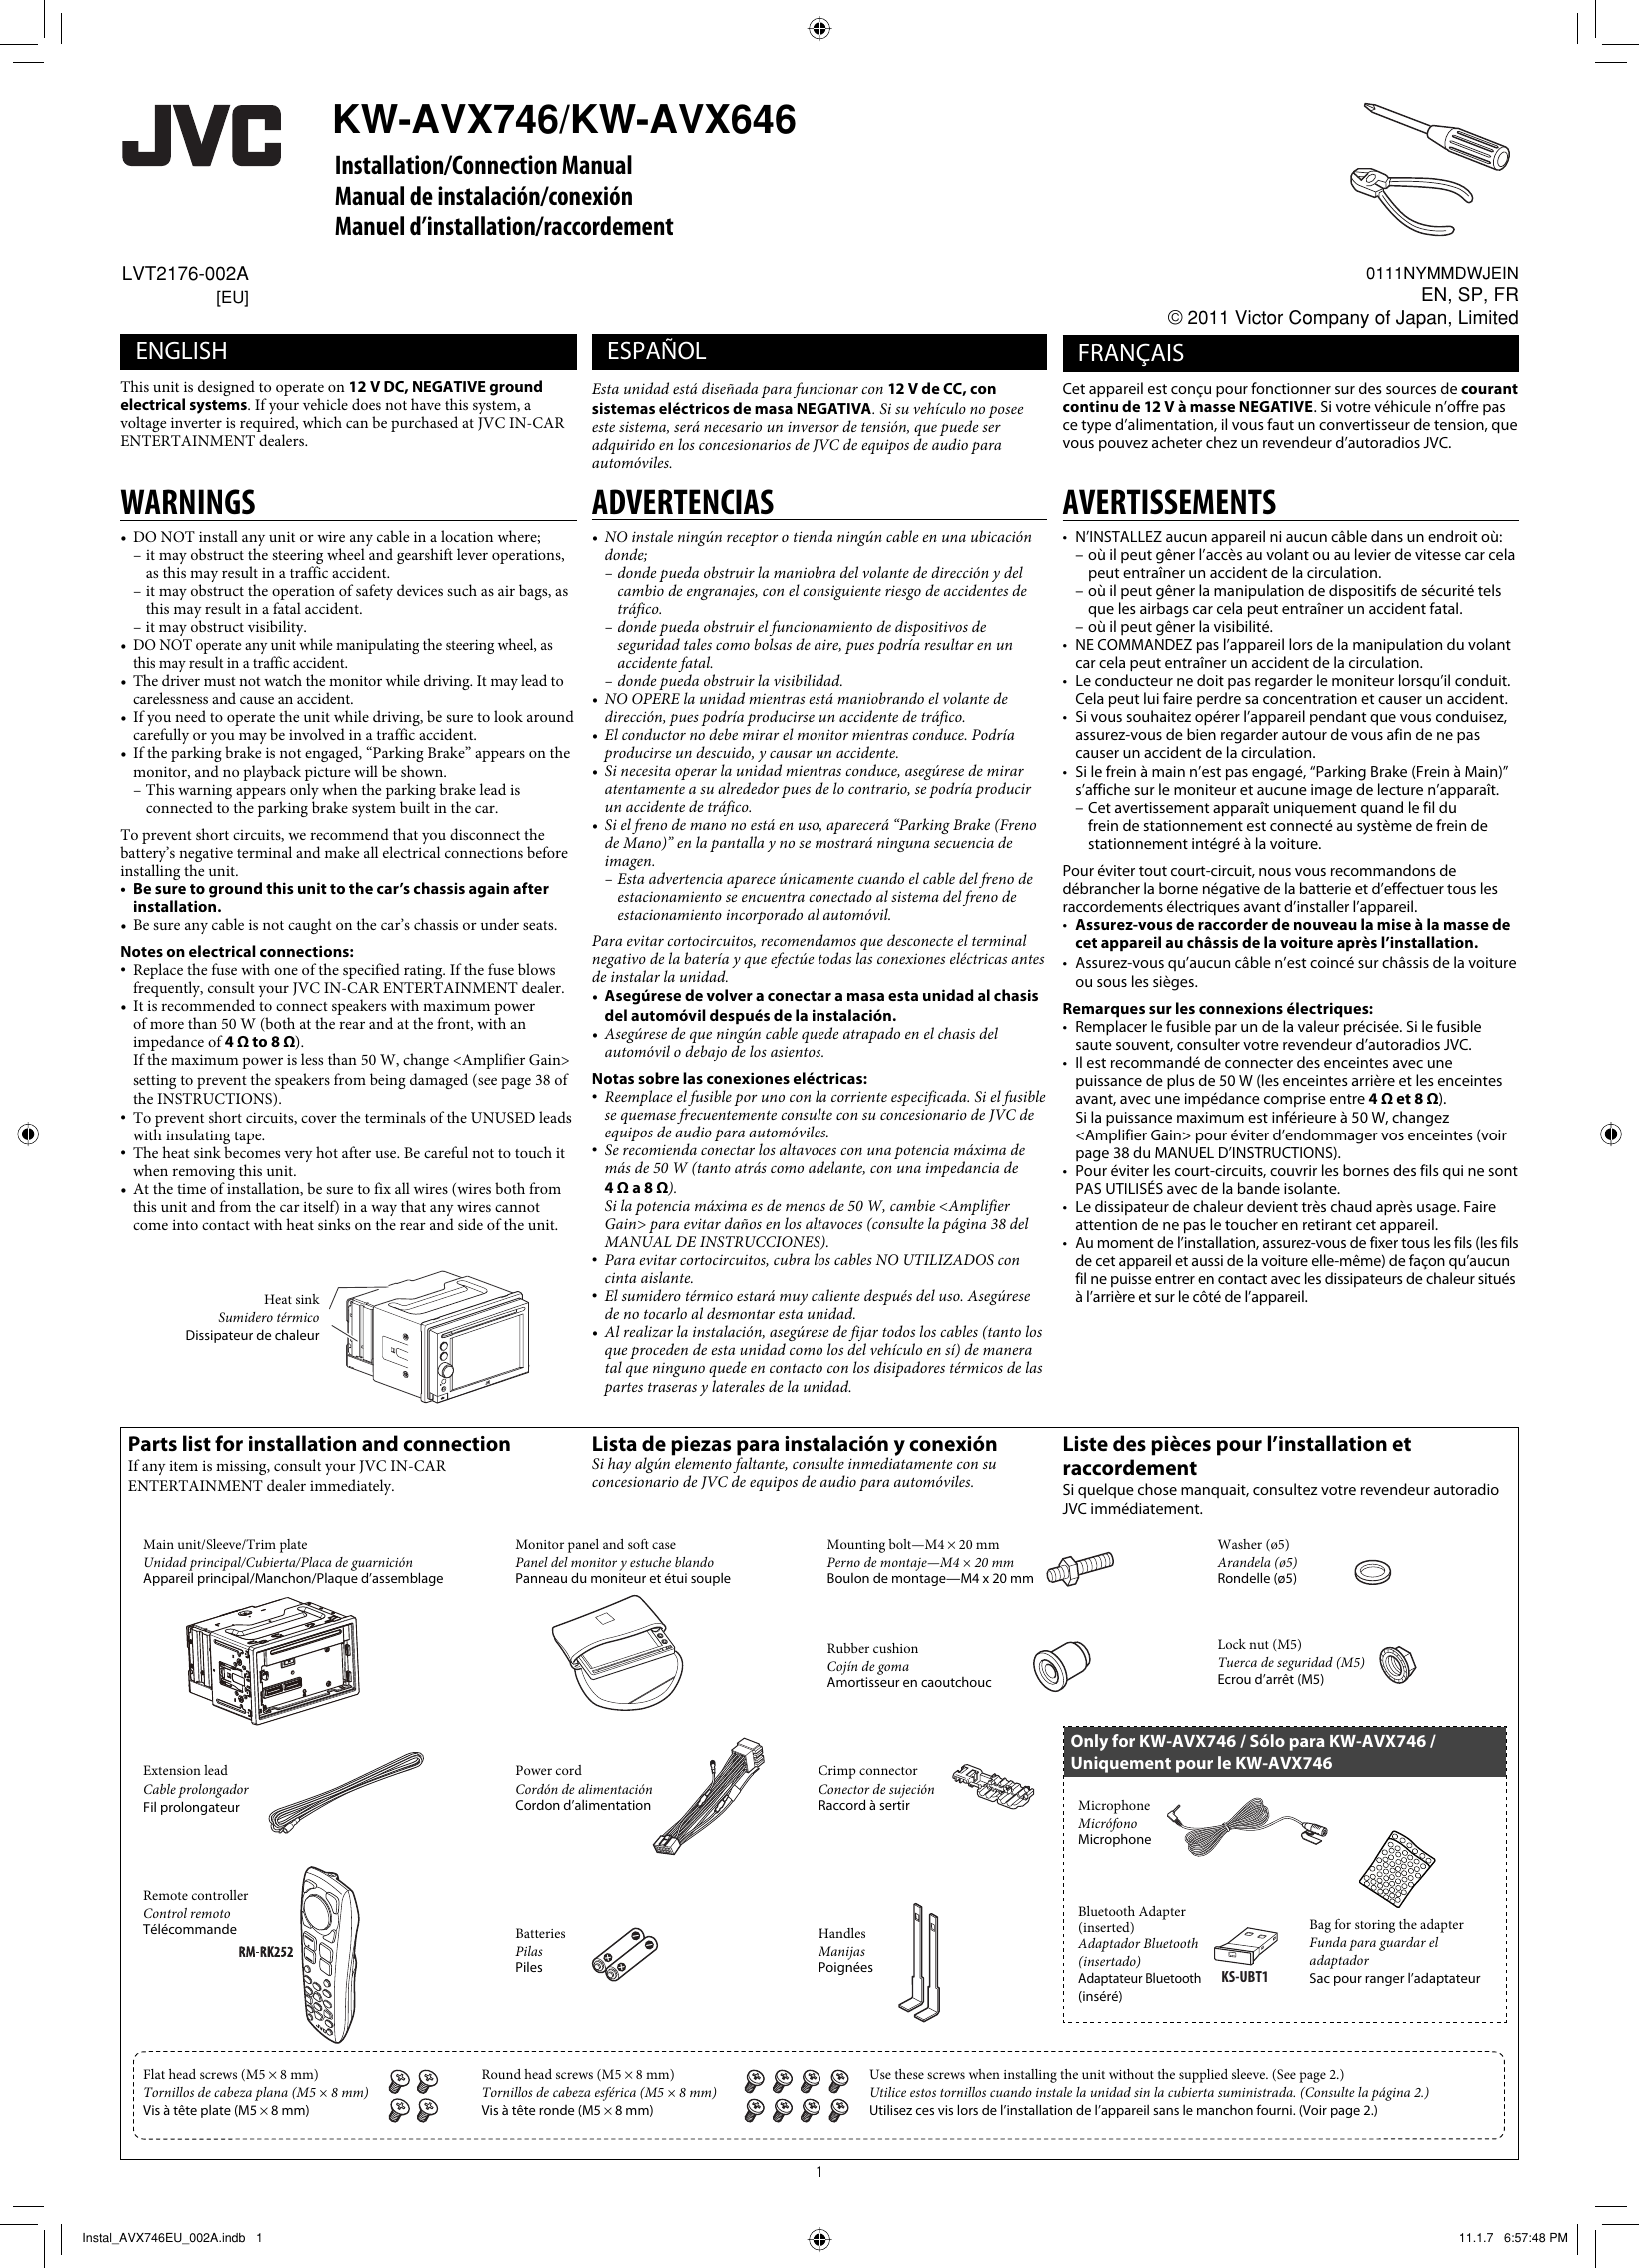 Page 1 of 6 - JVC KW-AVX646EU KW-AVX746/KW-AVX646[EU] User Manual KW-AVX646EU, KW-AVX746EU LVT2176-002A